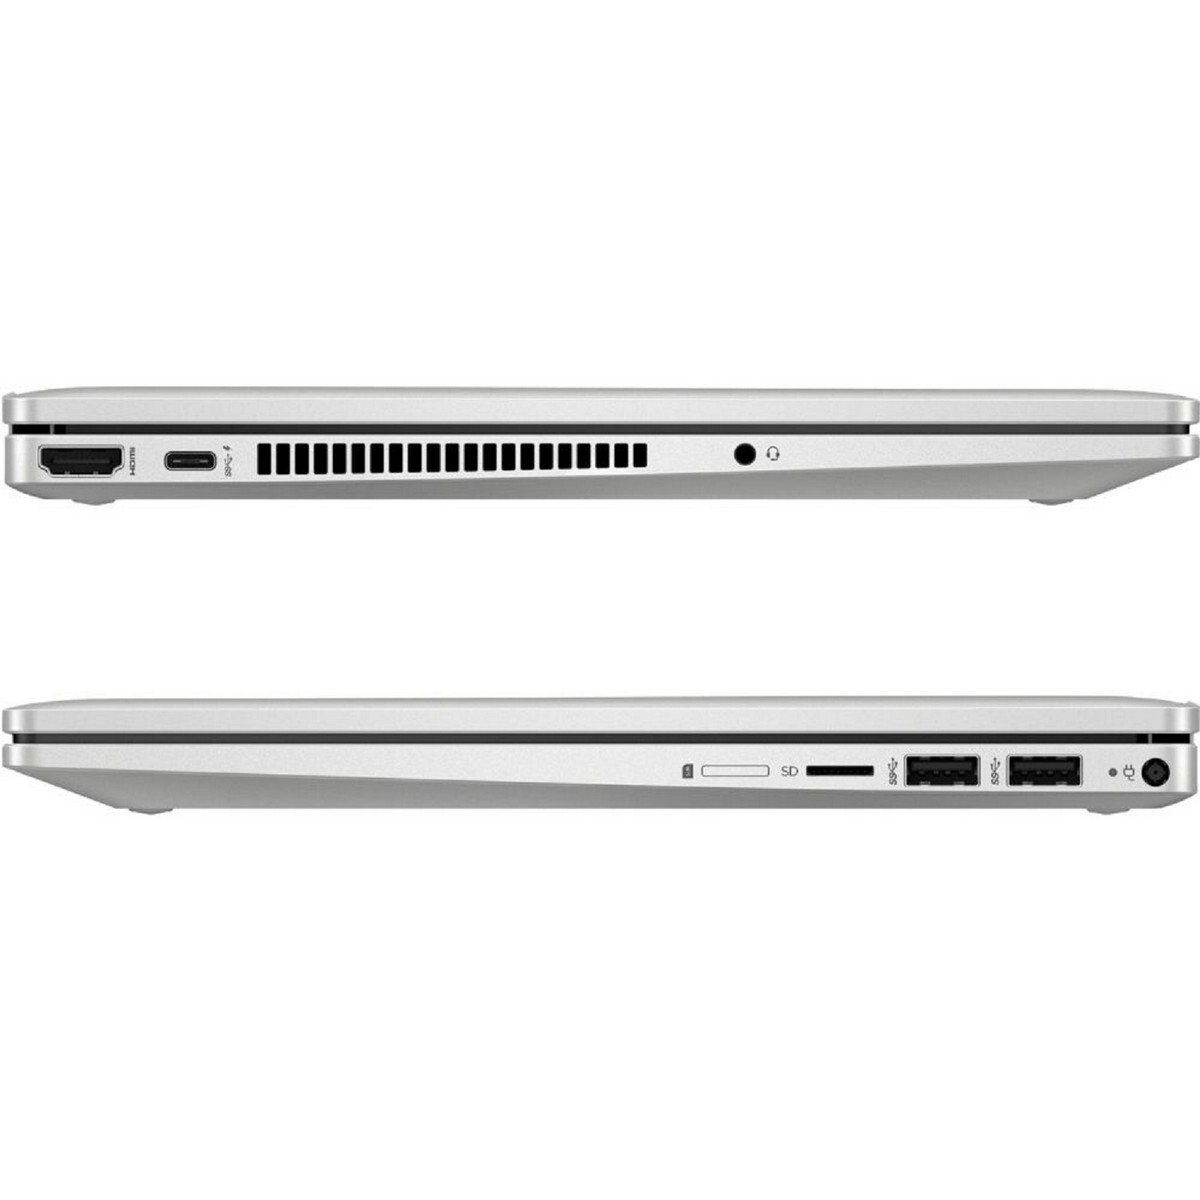 HP Notebook 12th Gen Core i3 Processor  8 GB/512 GB SSD/Windows 11 Home EK0137TU Laptop